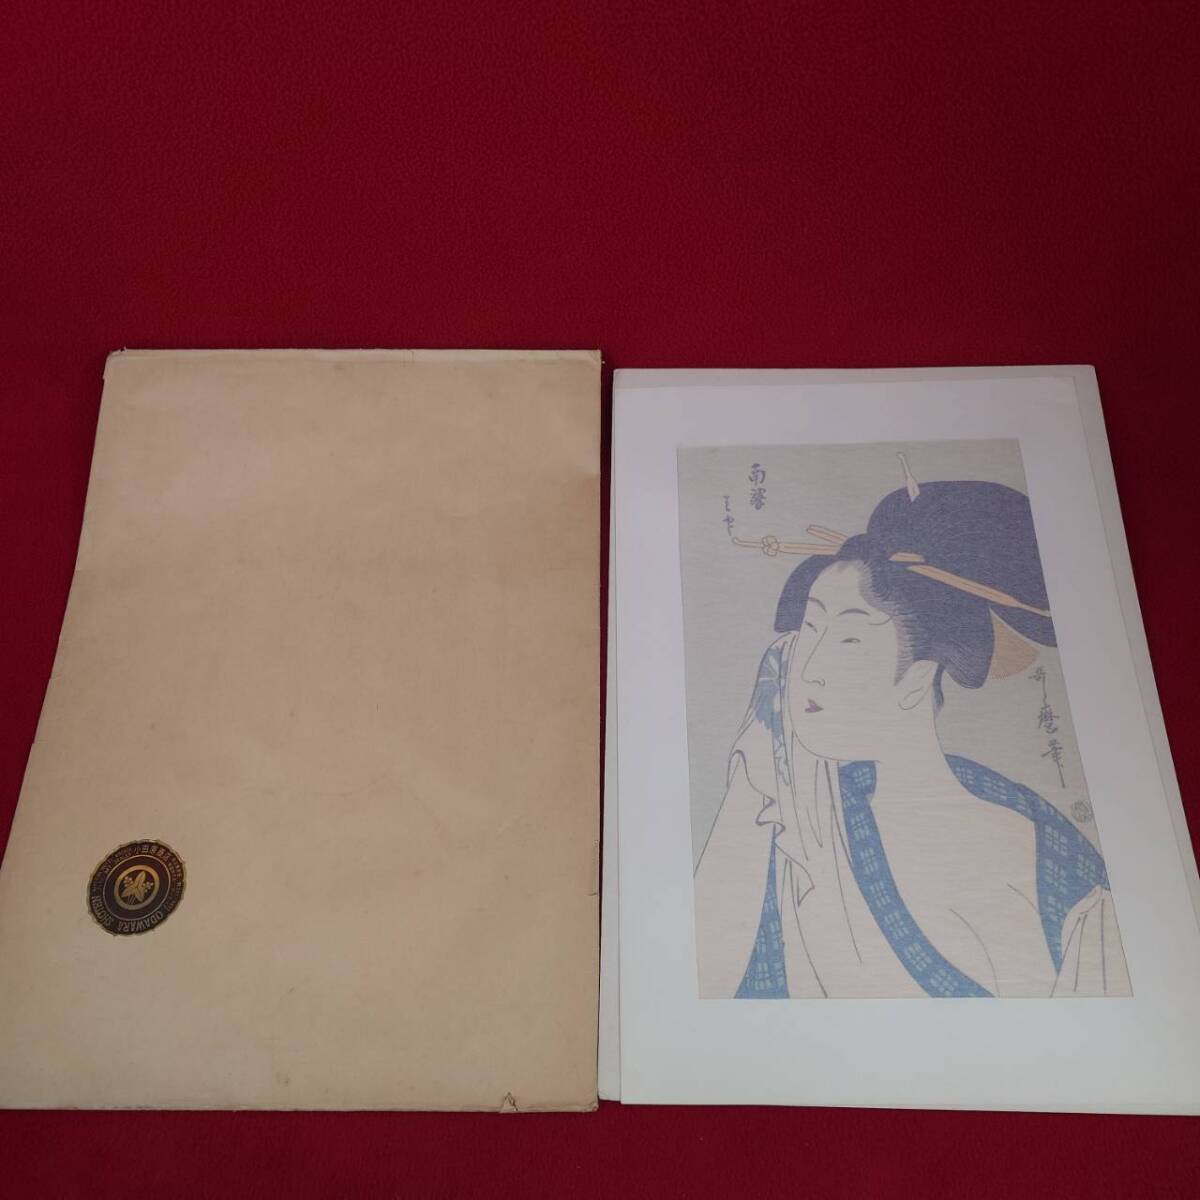 Prints, Ukiyo-e woodblock prints, Kitagawa, Utamaro, Minami Station is a stamp, Adachi woodblock prints, Odawara Shoten, masterpieces, portraits of beauties, antiques, large size, stamp, signature, Painting, Ukiyo-e, Prints, others